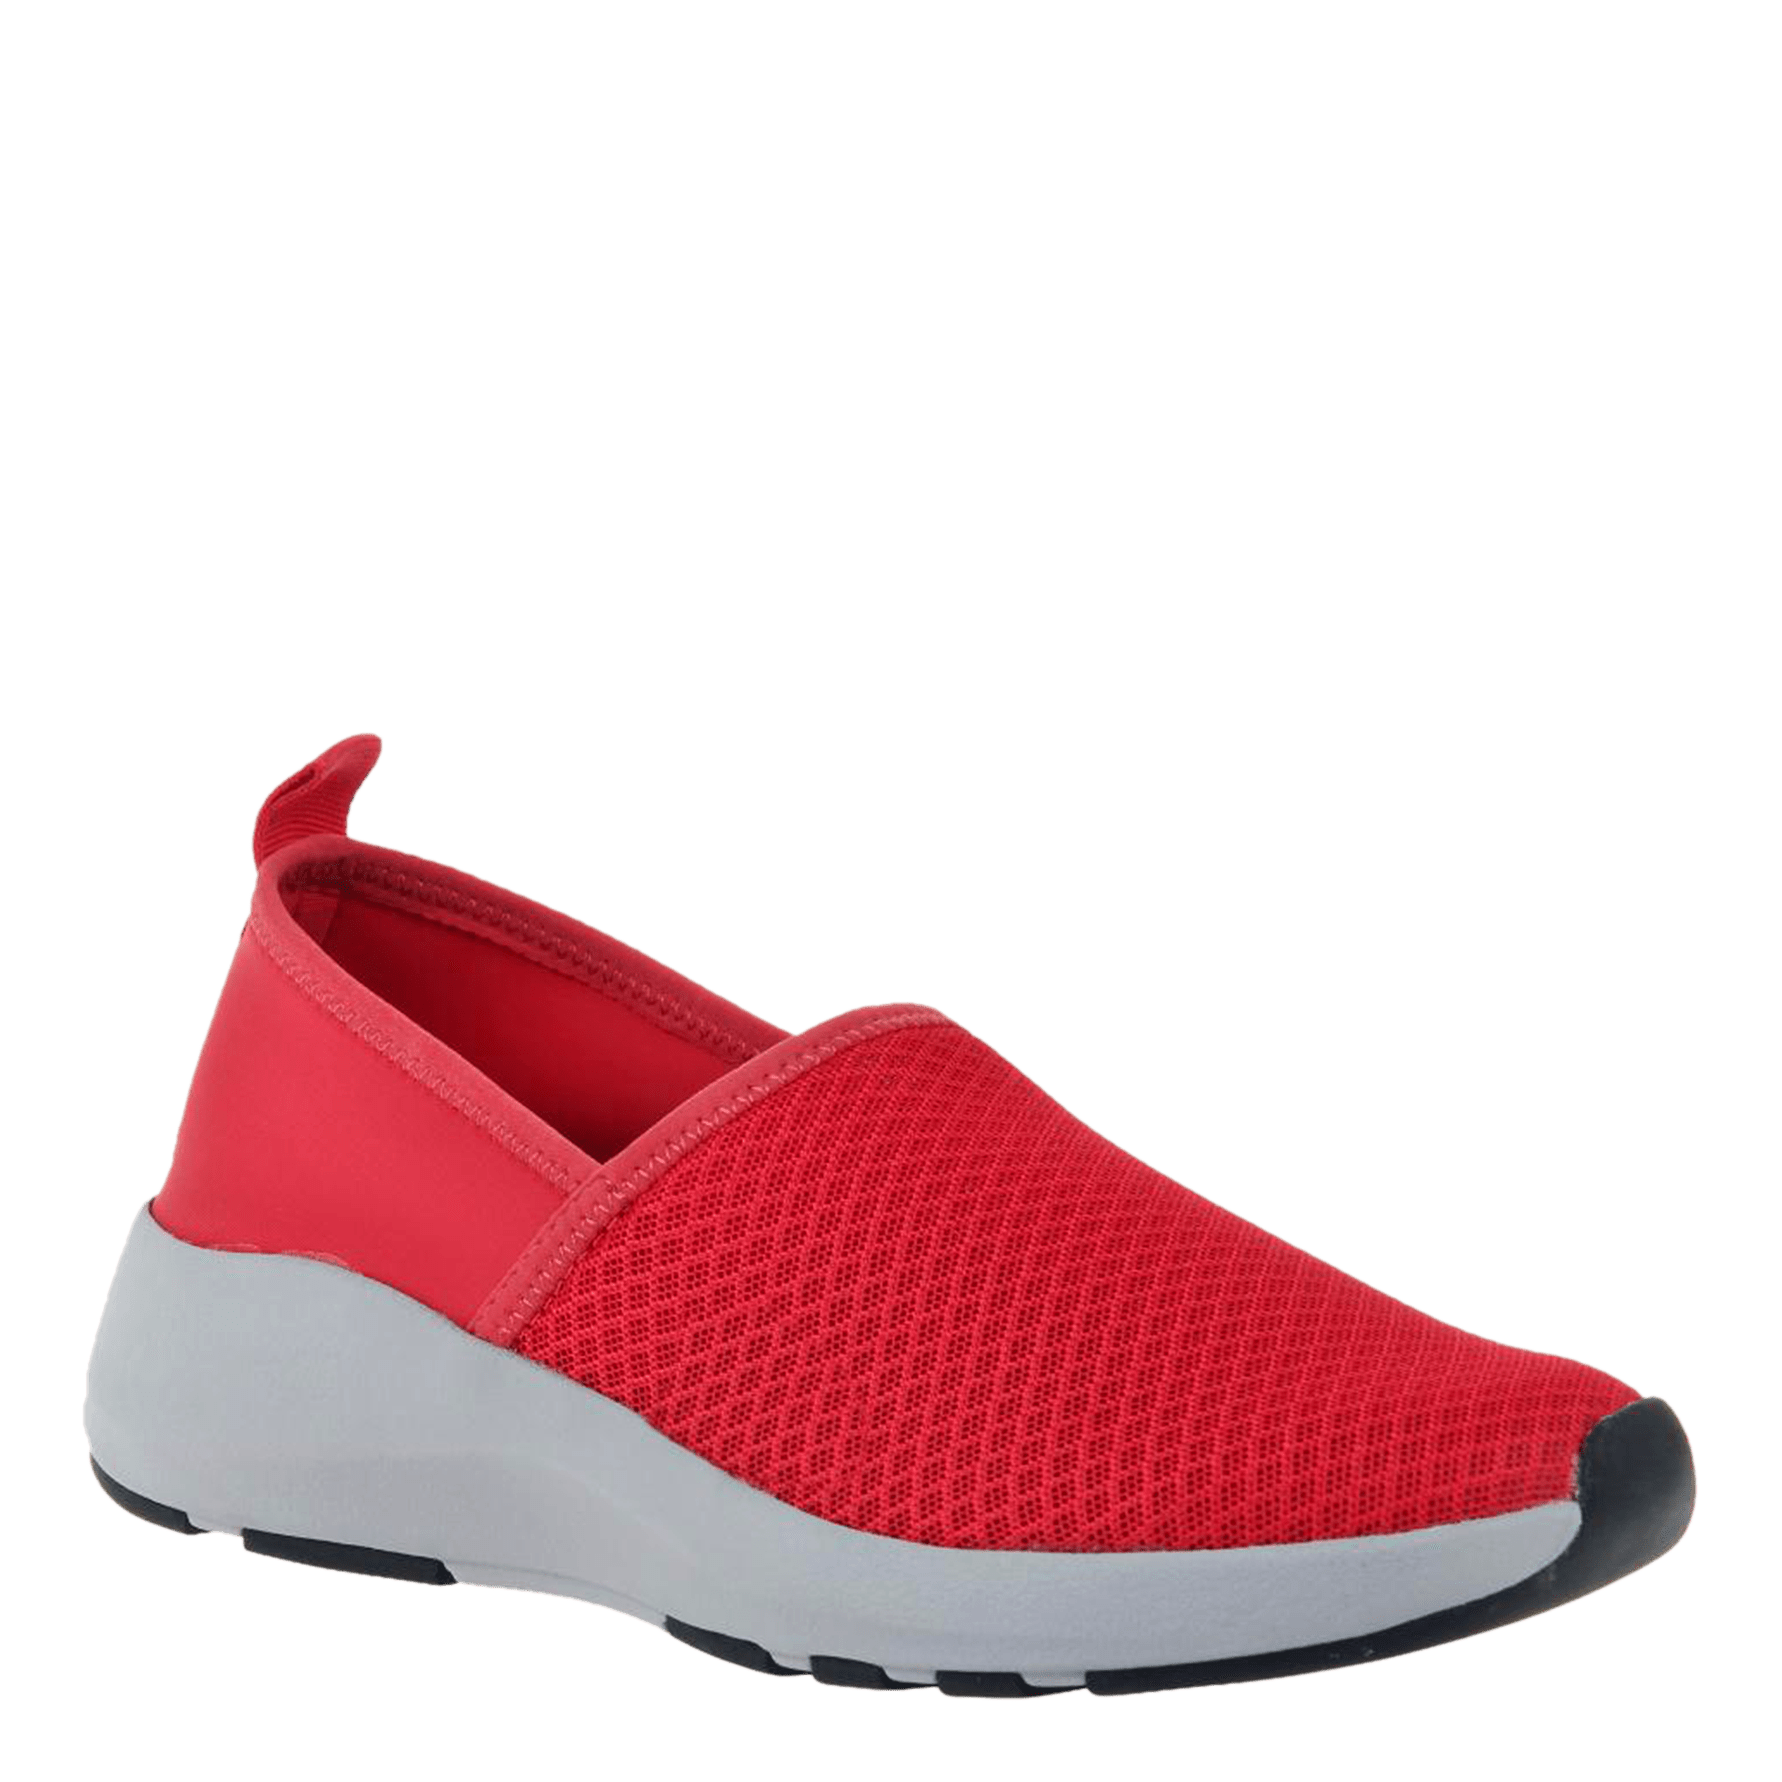 red slip on sneakers womens